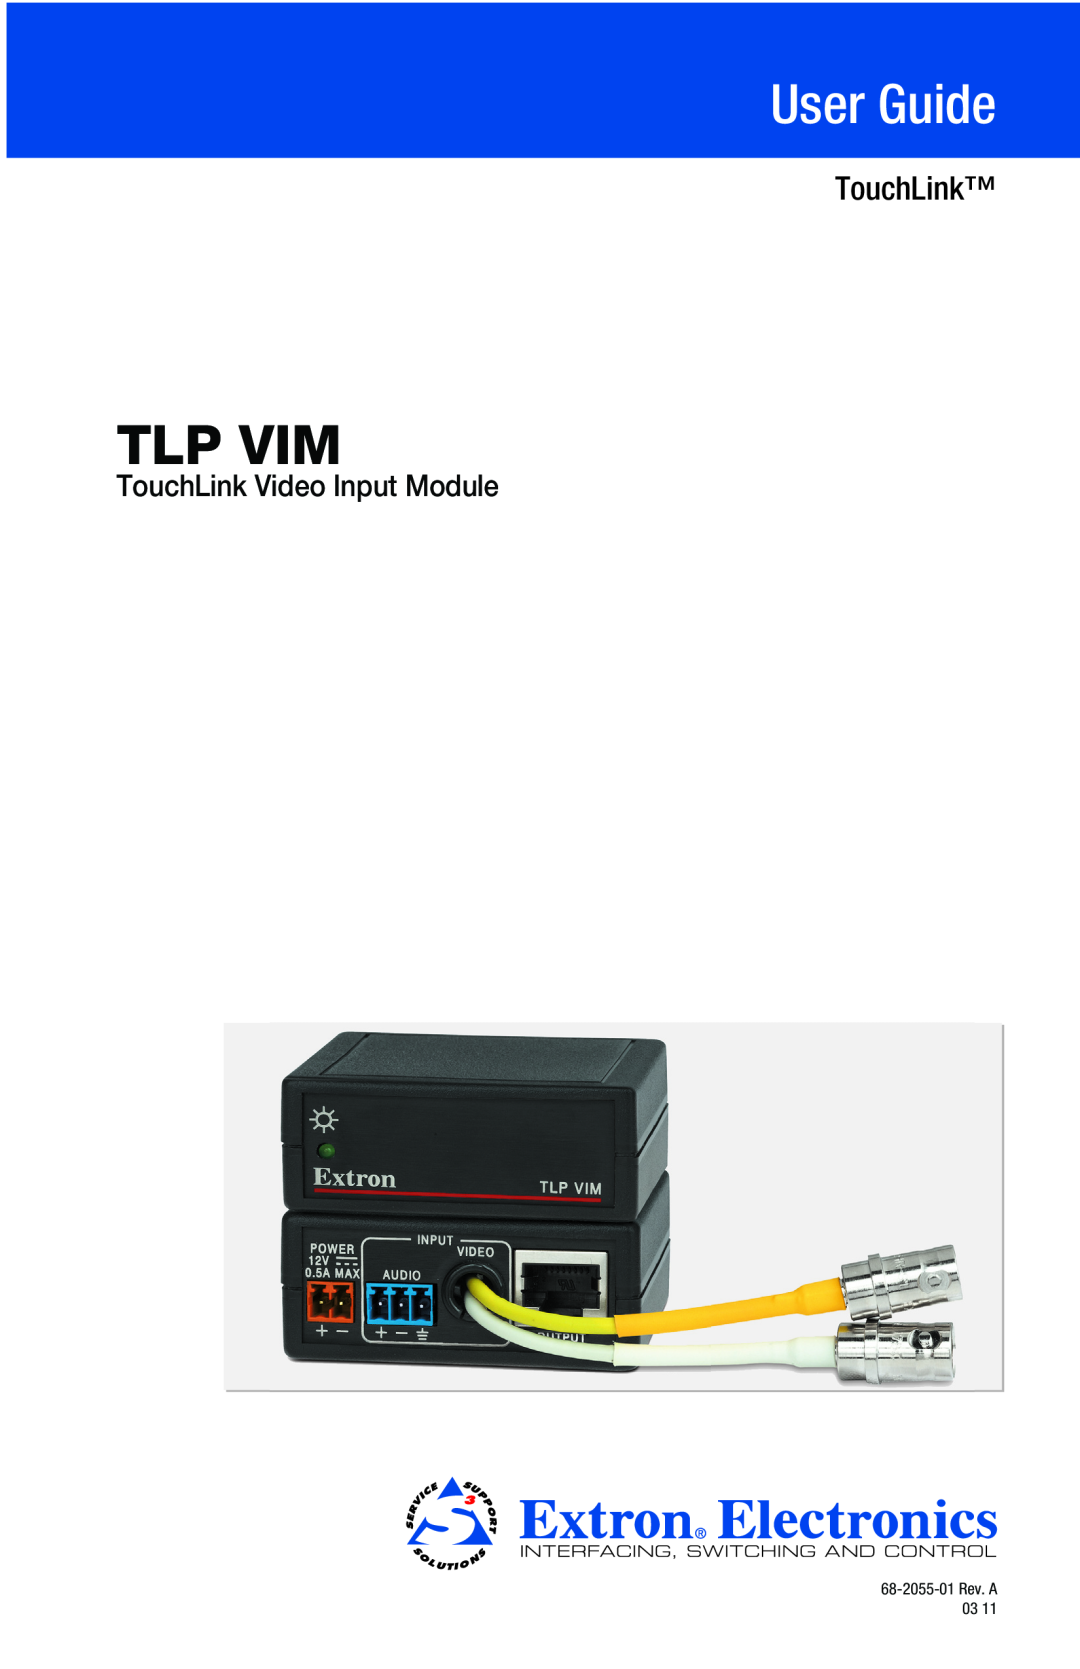 Extron electronic TLP VIM manual User Guide, Tlp Vim, TouchLink Video Input Module, 68-2055-01 Rev. A 